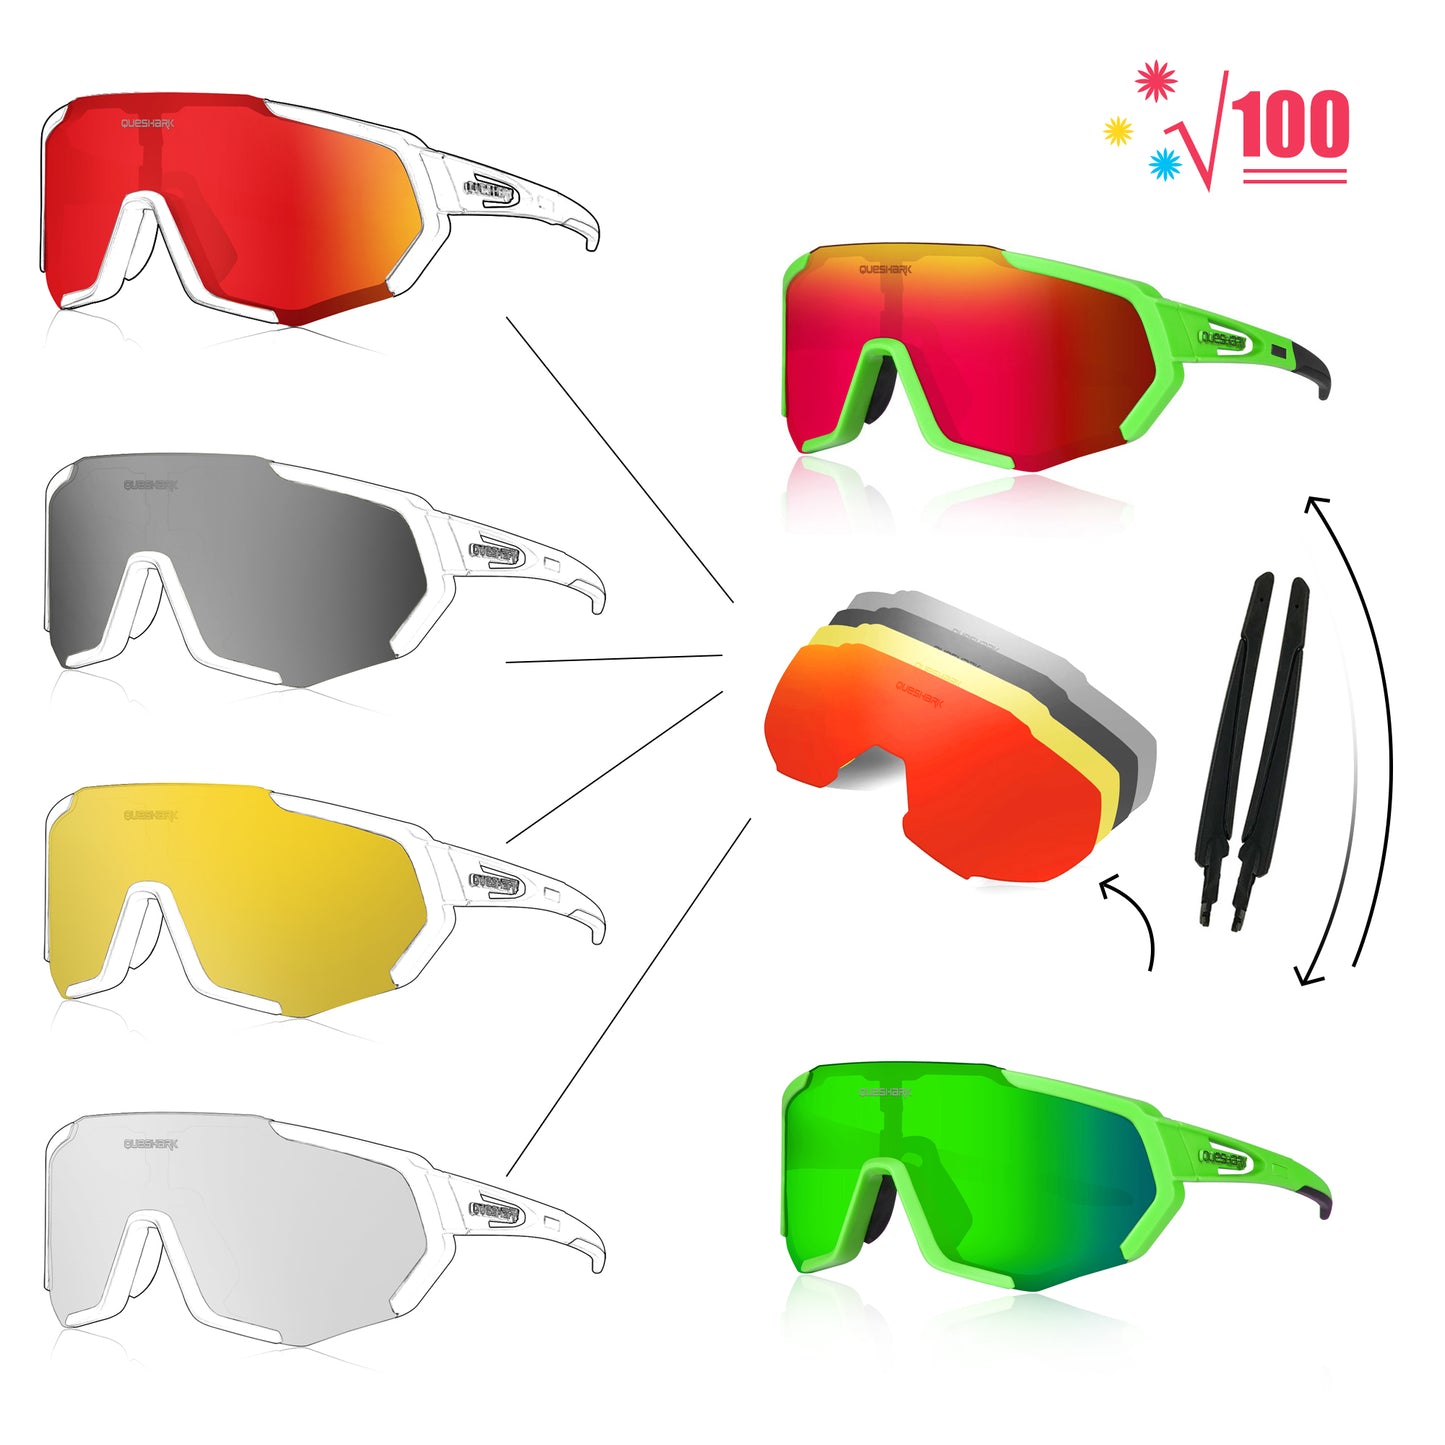 <transcy>QE48 Gafas polarizadas verdes Gafas de sol para bicicleta Gafas para bicicleta Gafas para ciclismo UV400 5 lentes / juego</transcy>